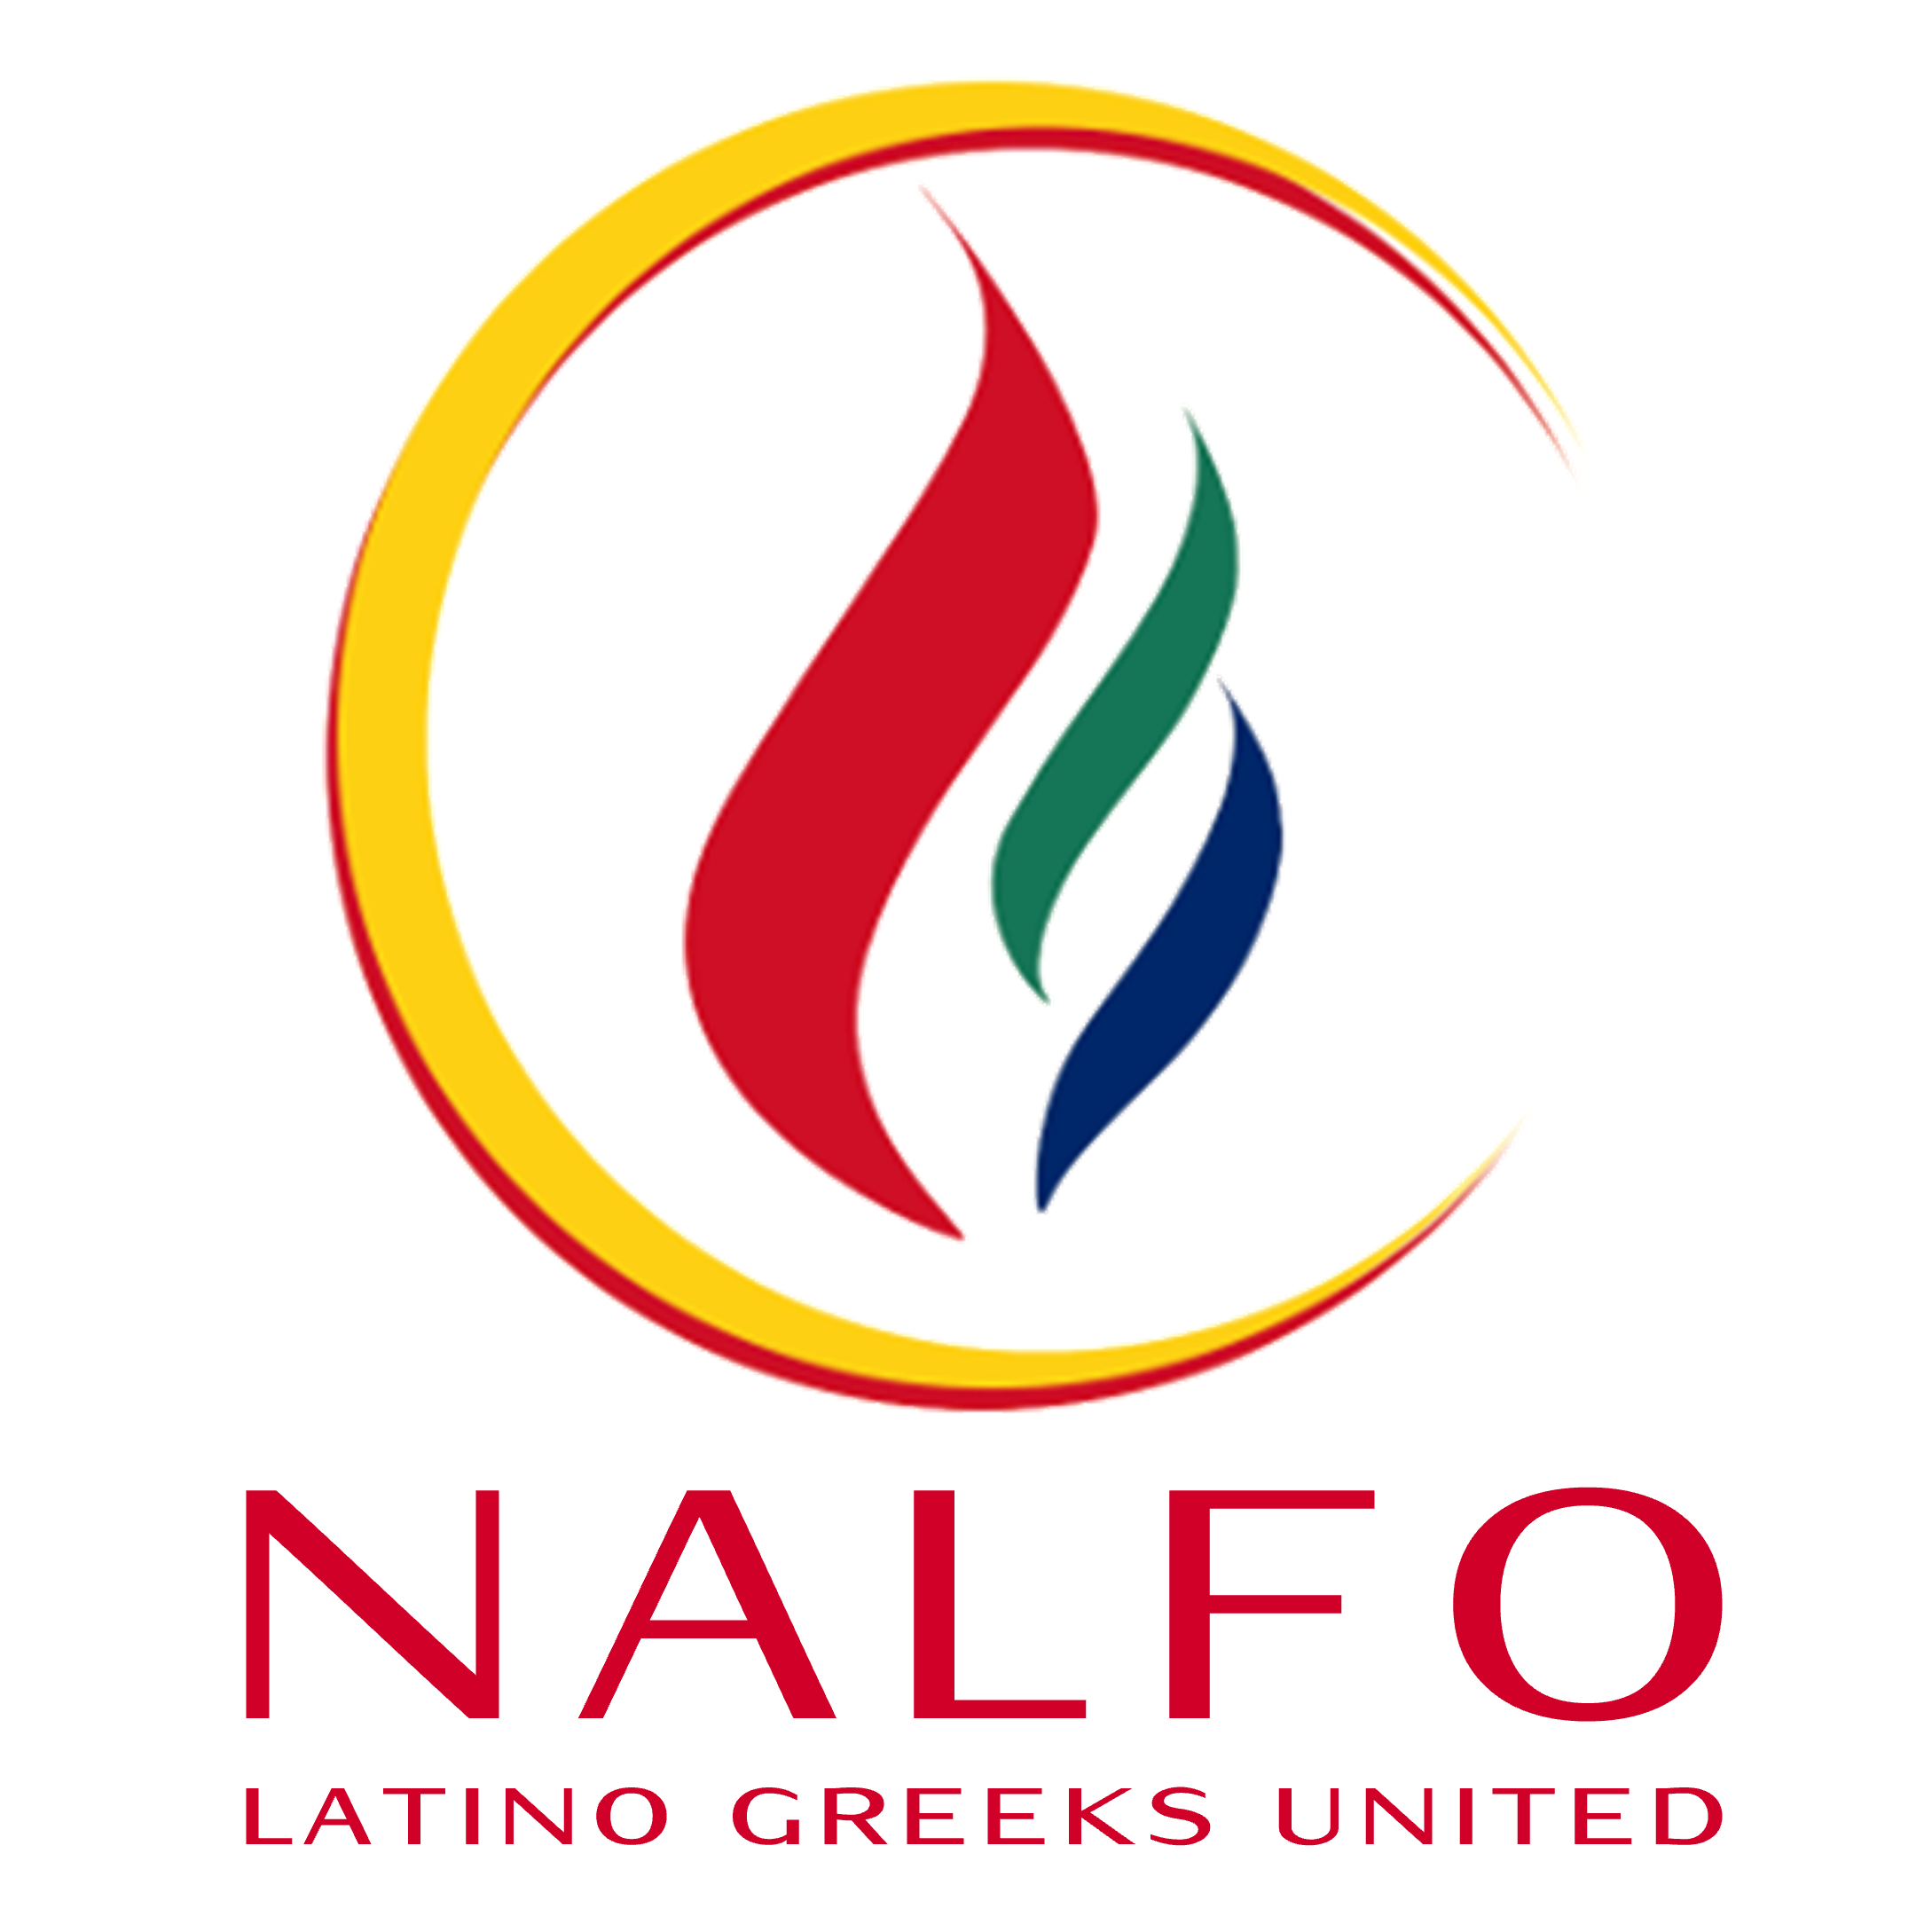 sponsor logo image